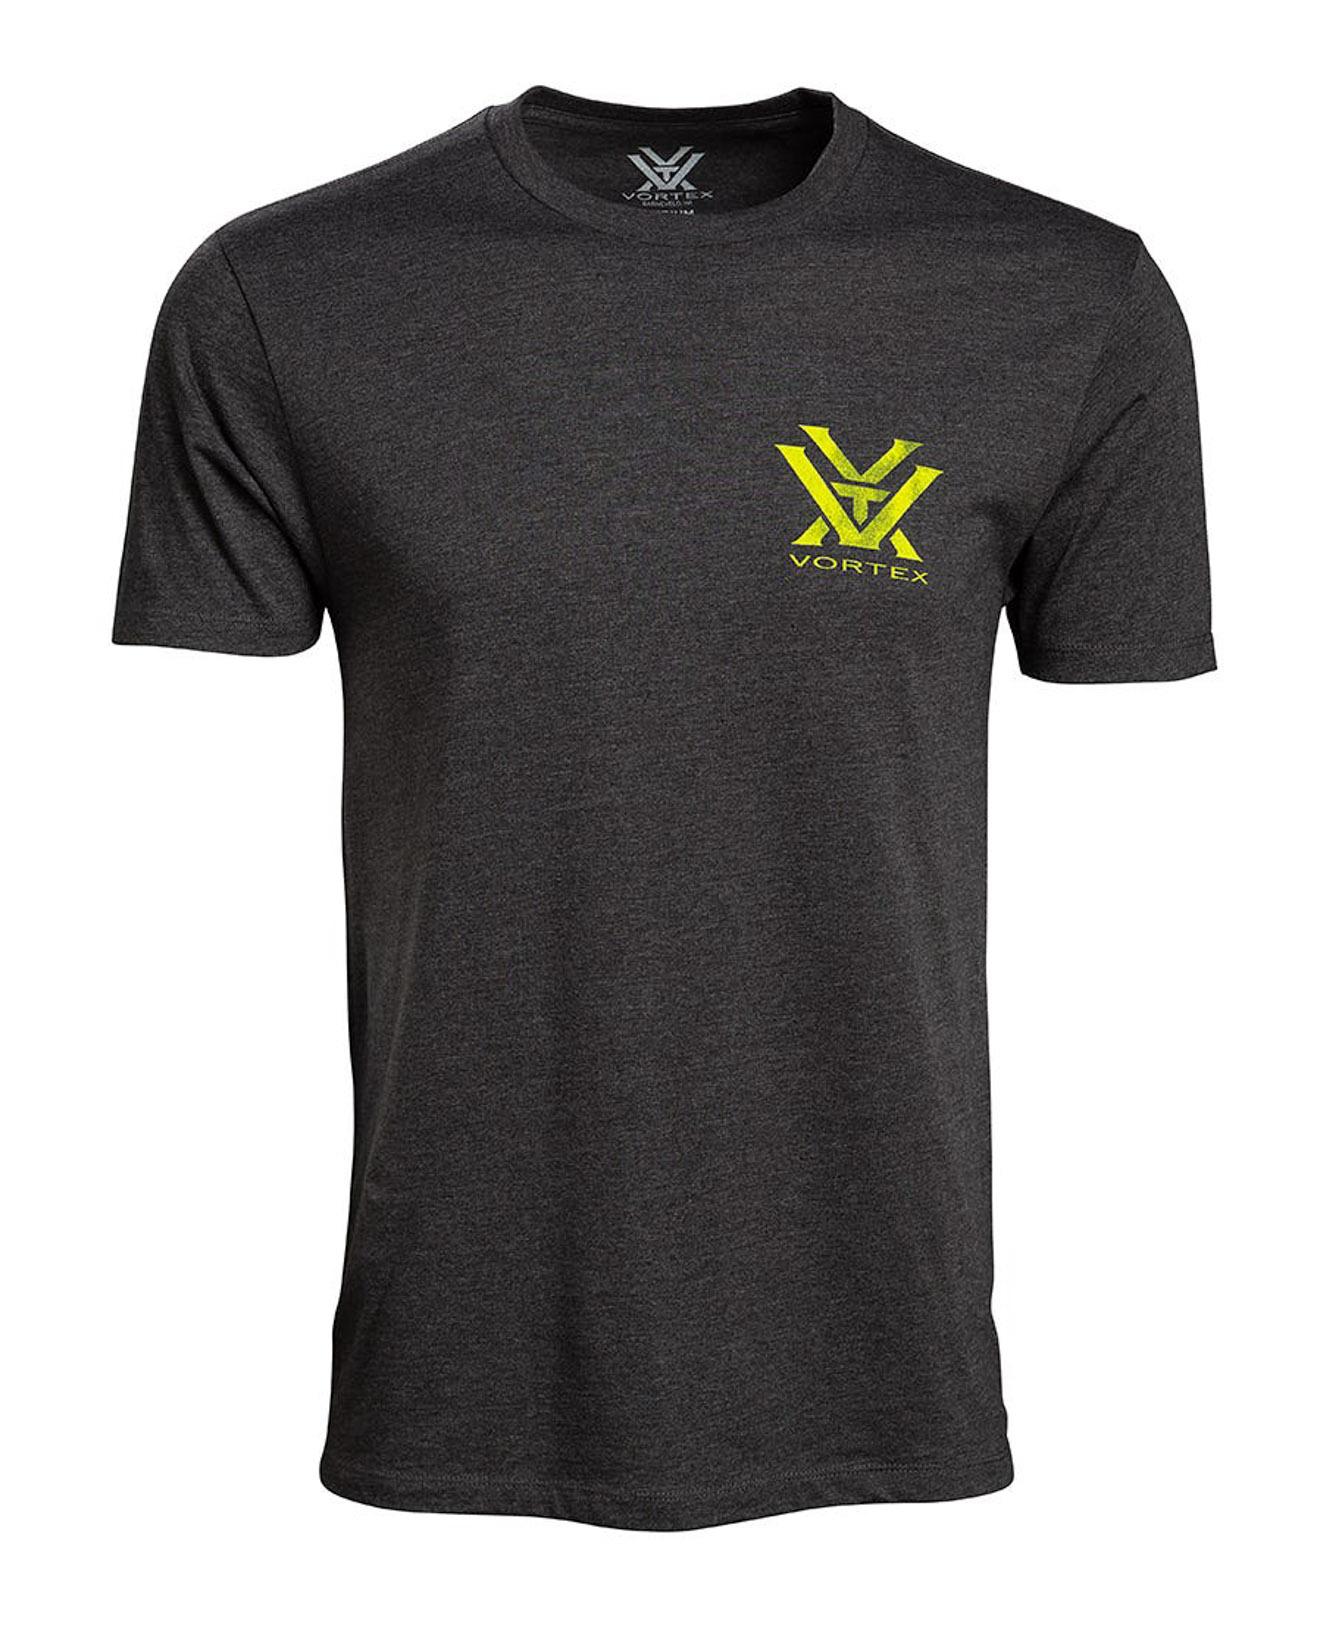 Vortex Optics Concealed Carry T-Shirt X Large 